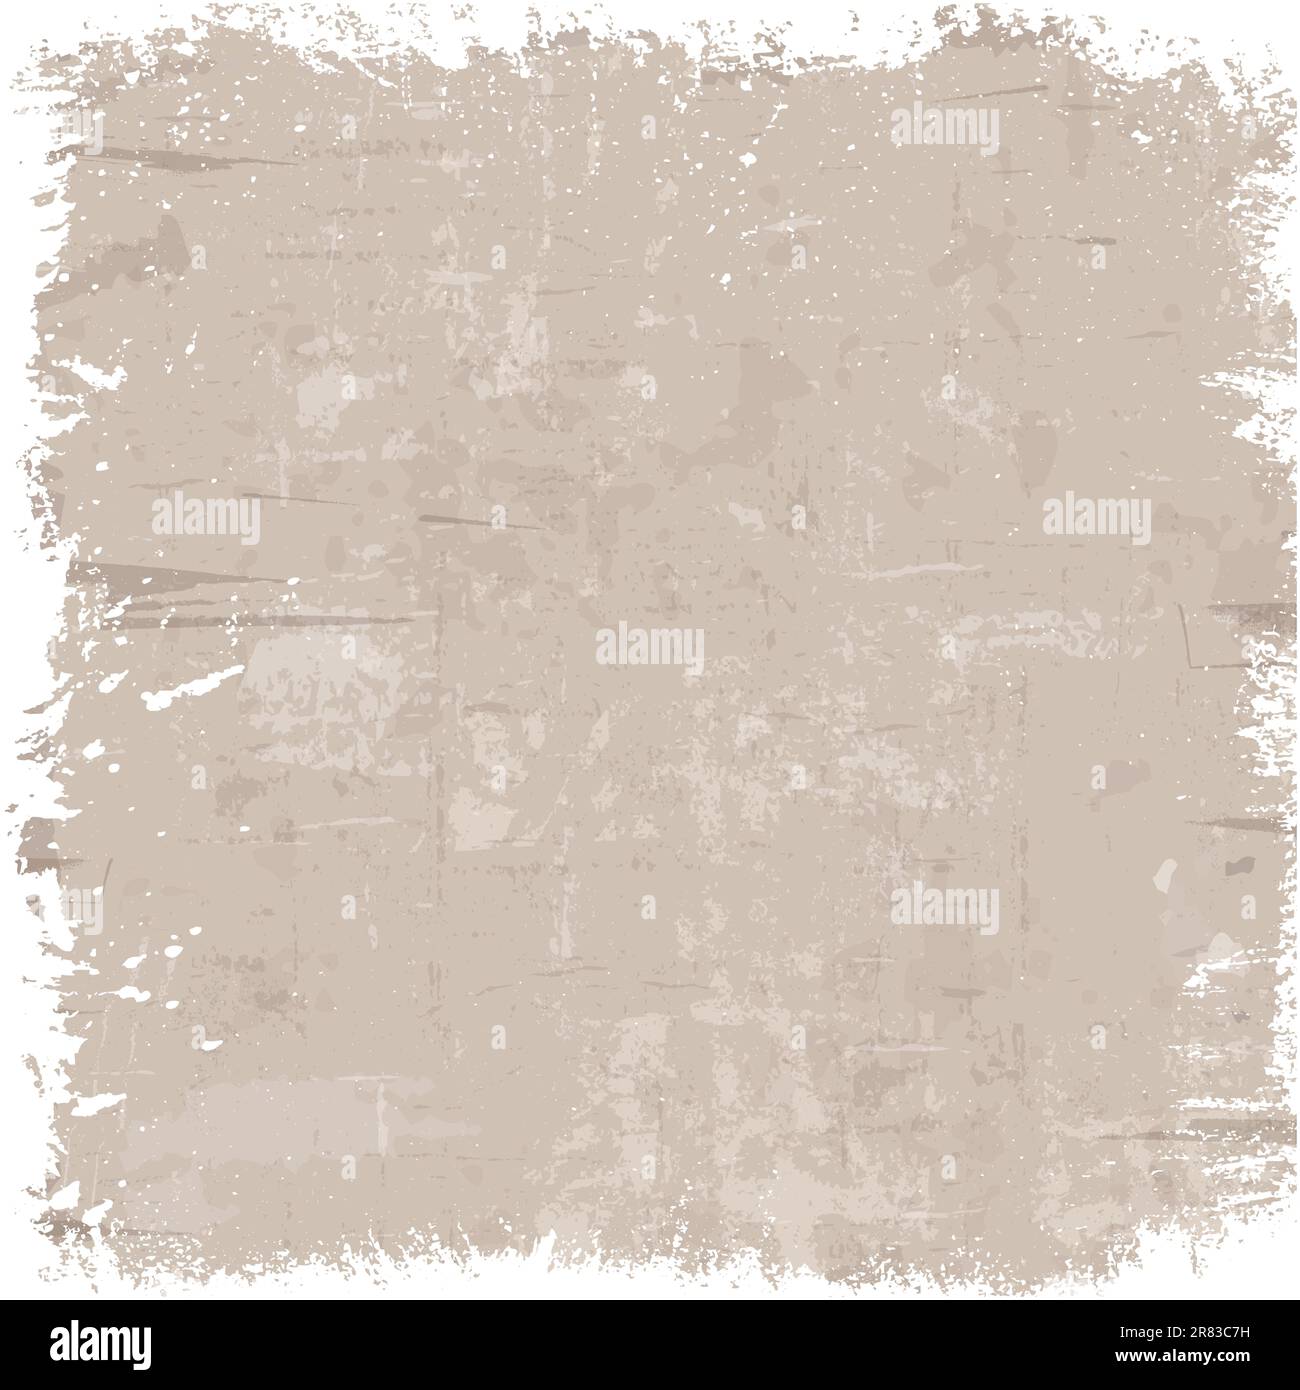 Detailed grunge background with a white splatter border Stock Vector